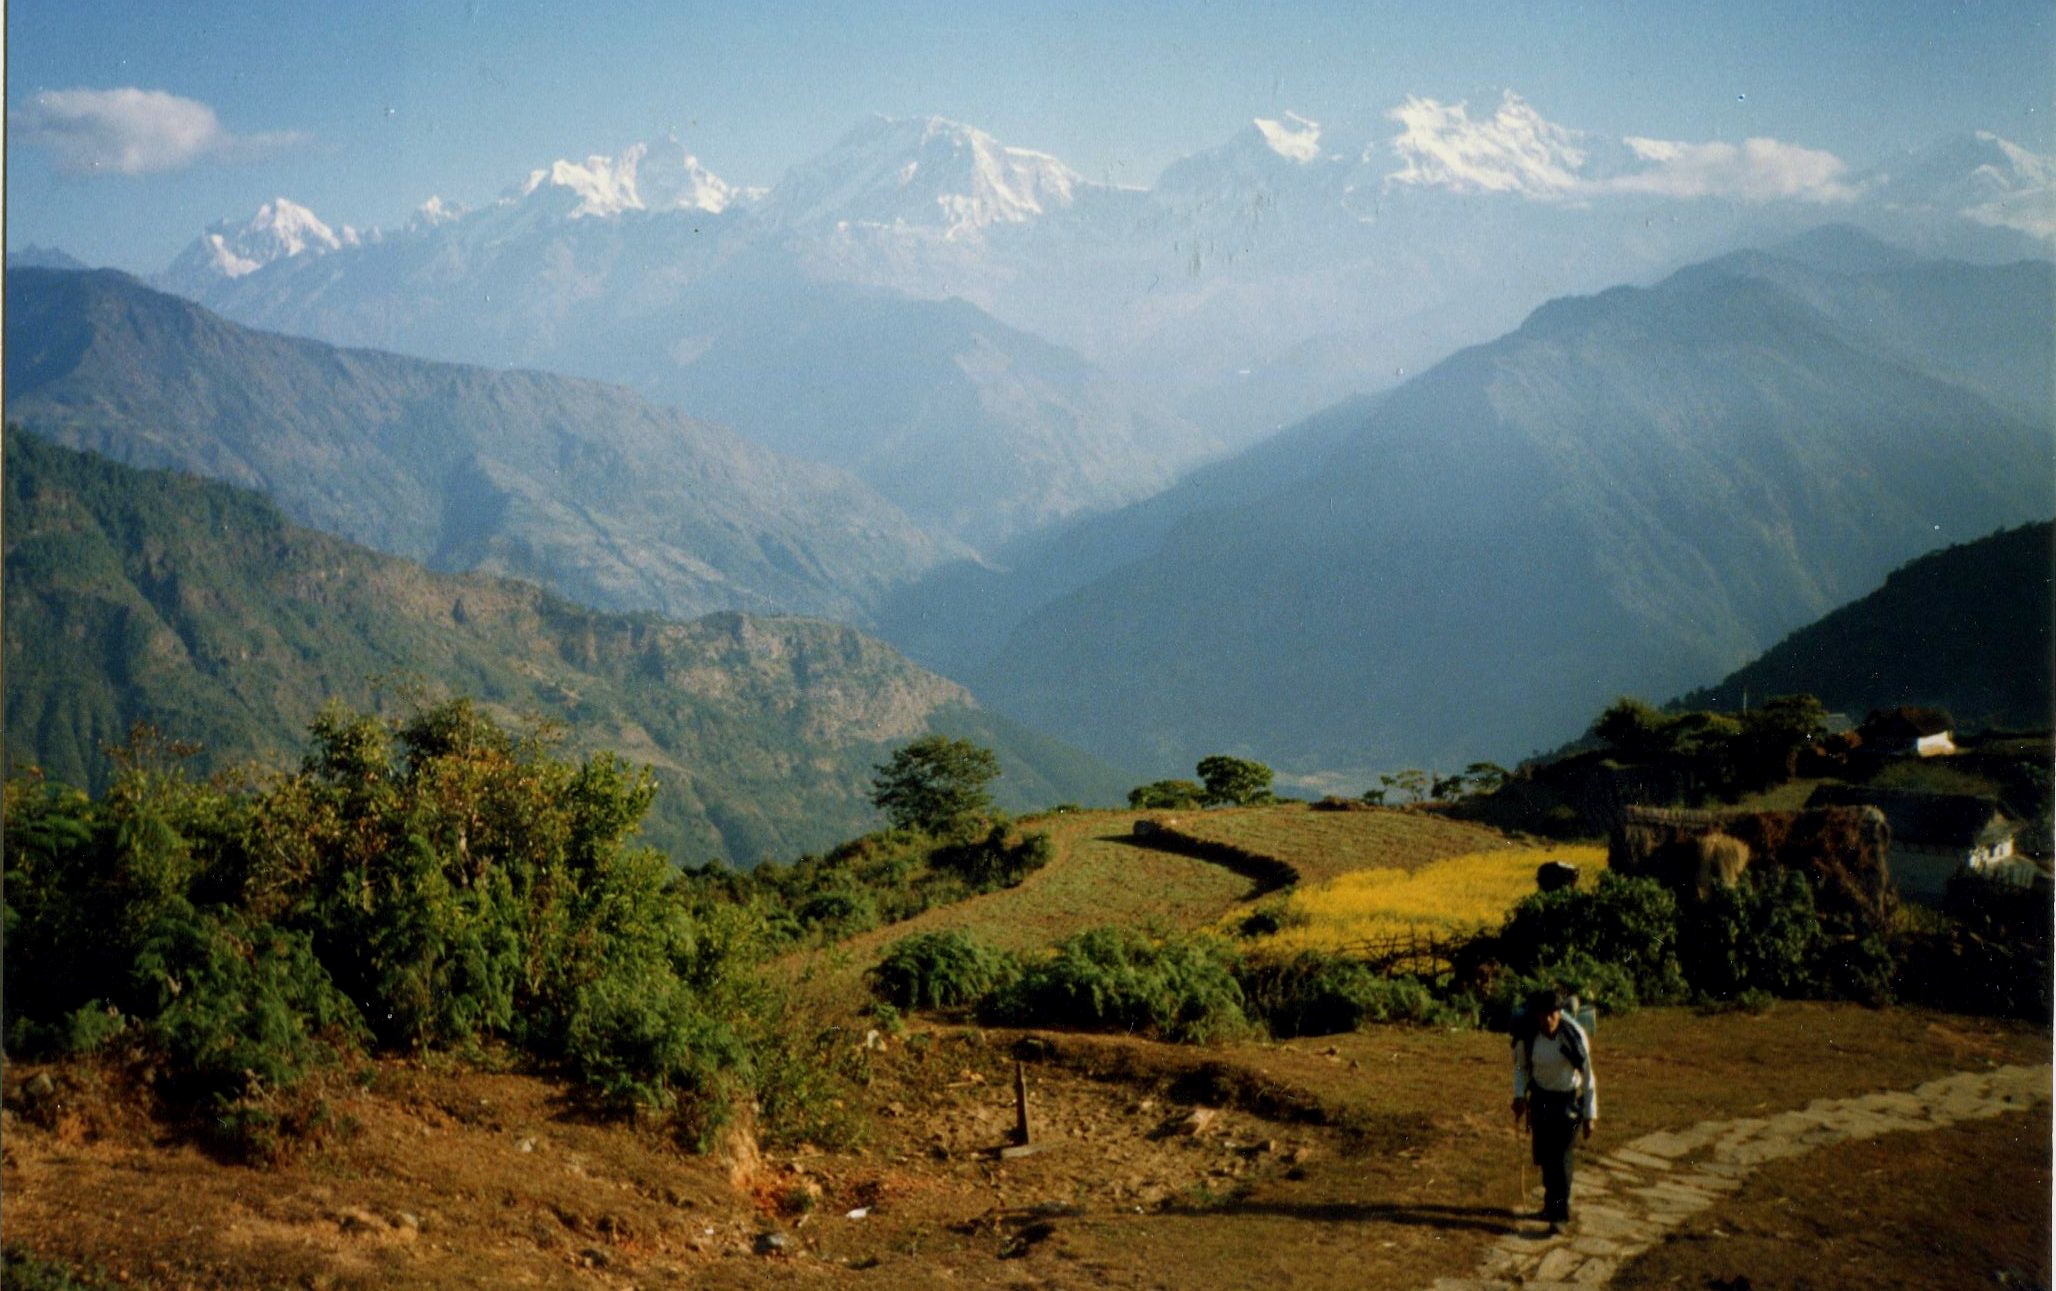 Photographs of the Marsayangdi Valley and the Manaslu Himal